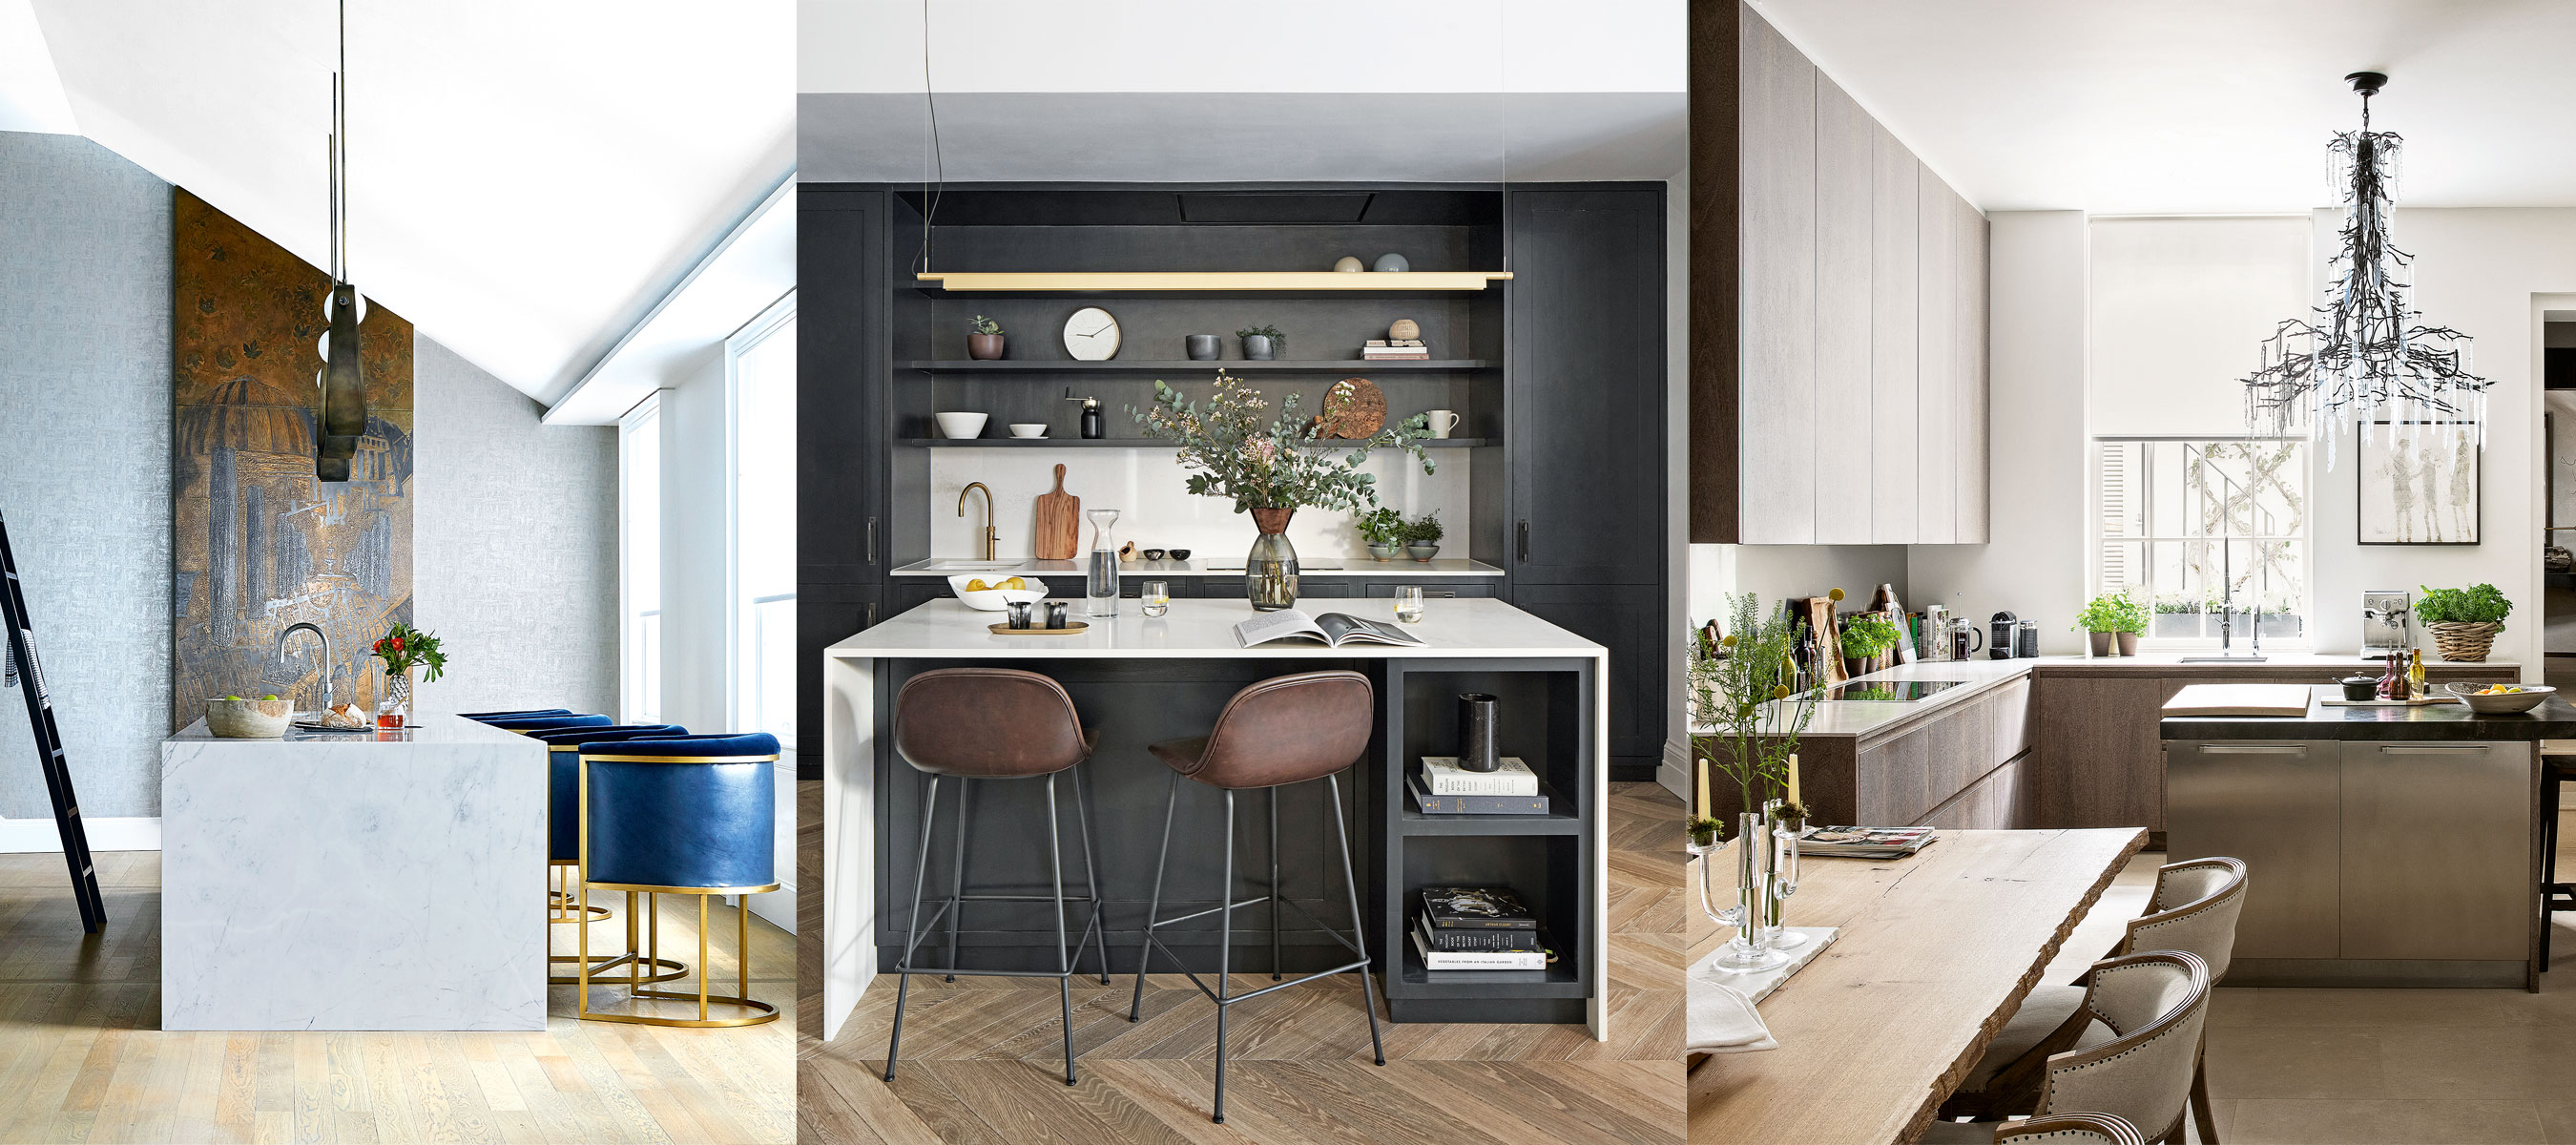 18 apartment kitchen ideas smart ways to update a studio   Homes ...